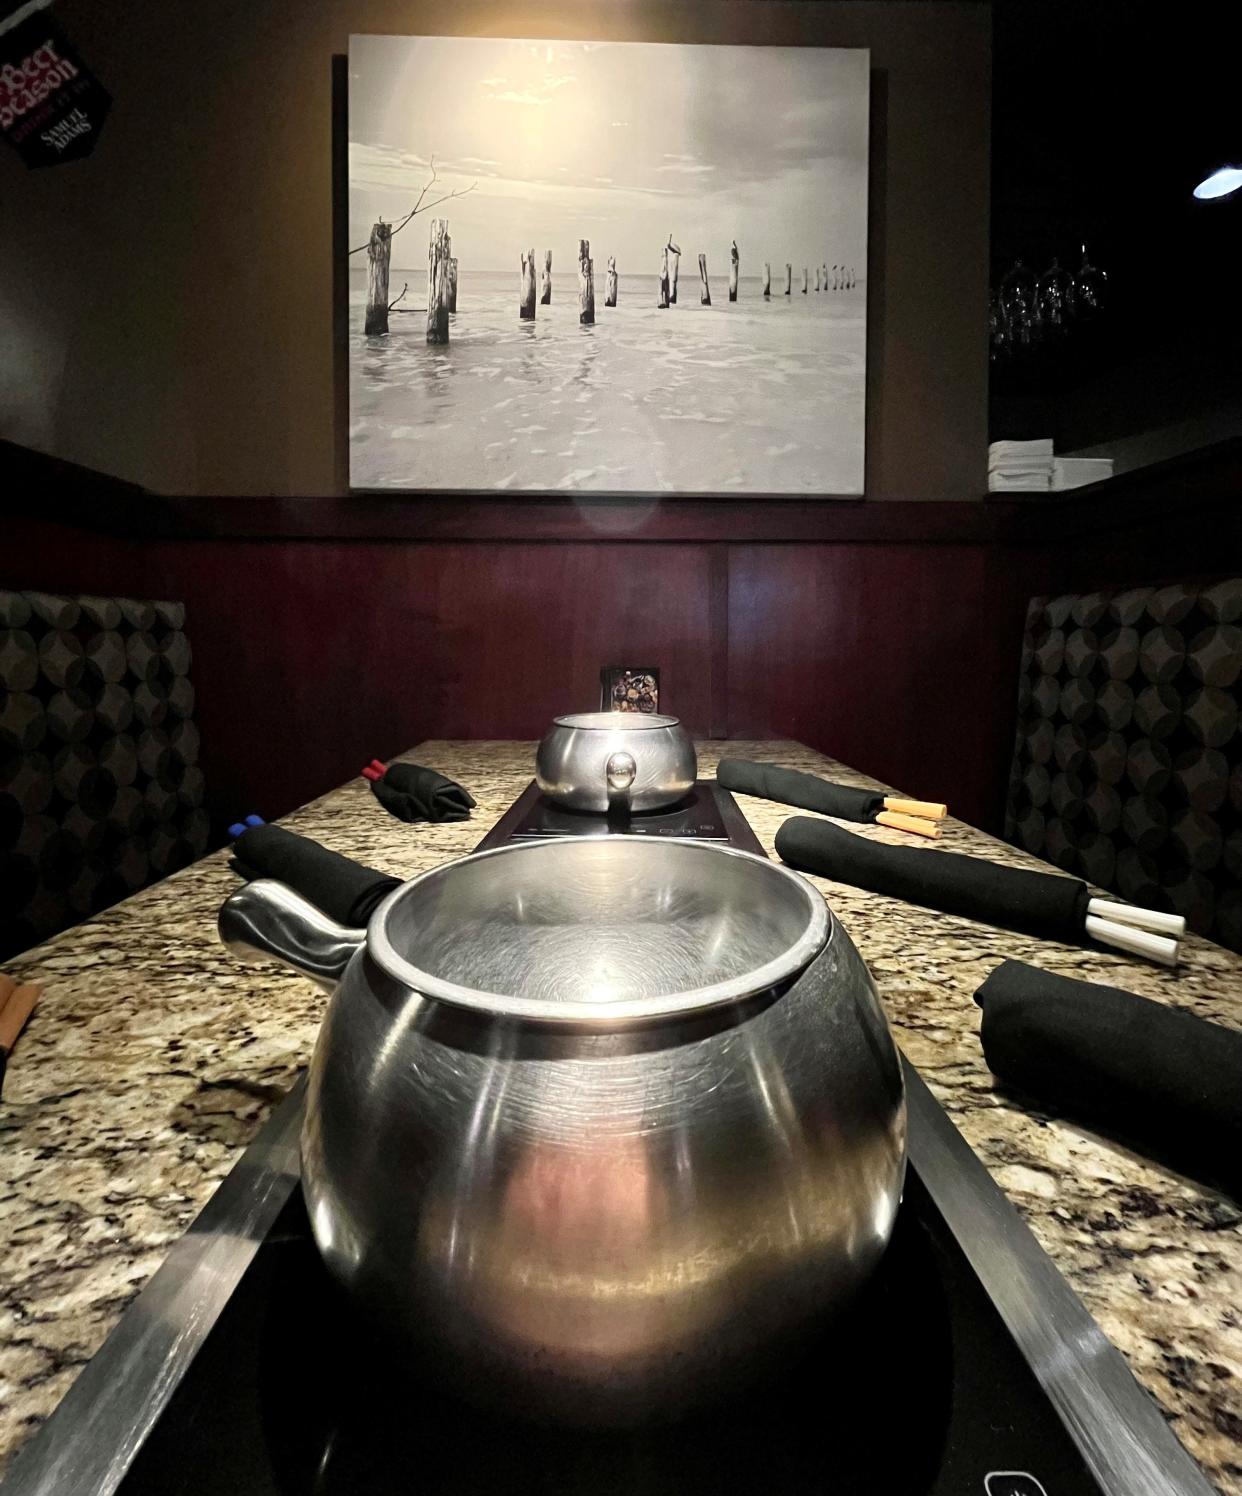 Melting Pot's fondue pots provide an interactive experience.